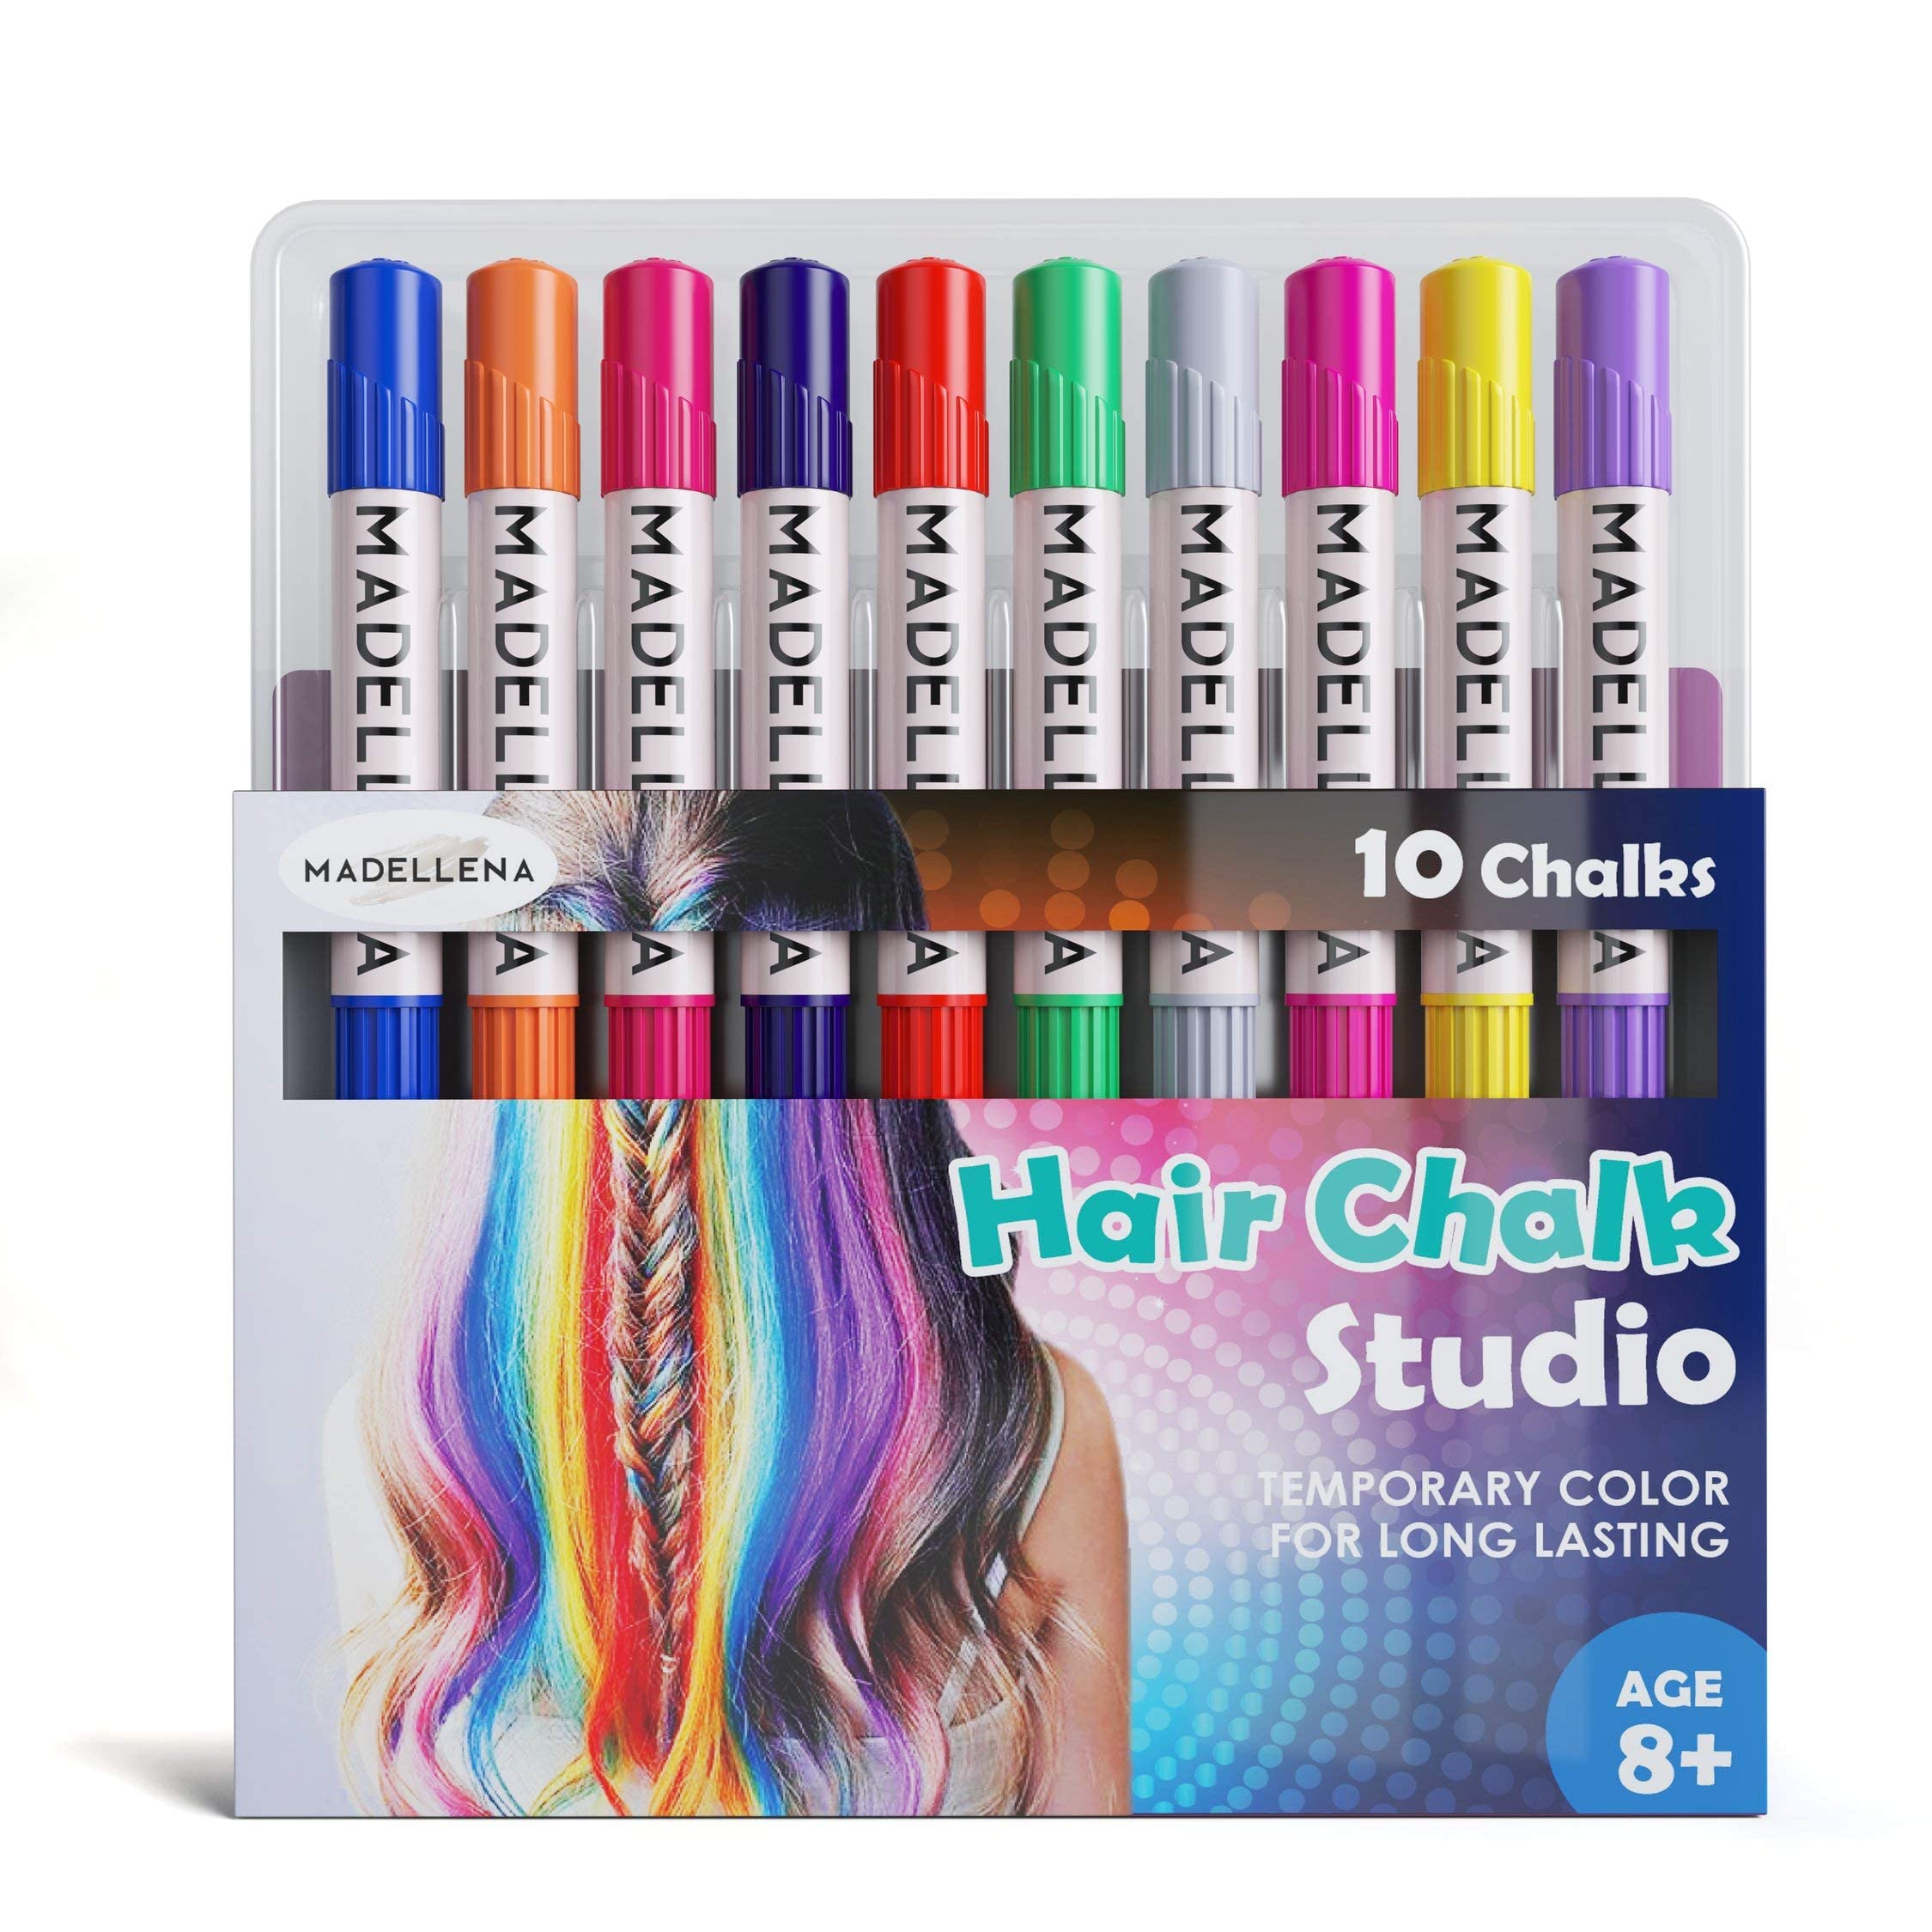 Hair Chalk For Kids - Hair Chalk for Girls - 10 Piece Temporary Hair Chalks - Birthday Gifts For Girls - Hair Chalk - Kids Hair Dye - Gifts for Girls Ages 3, 4, 5 ,6 ,7, 8, 9, 10 yr olds